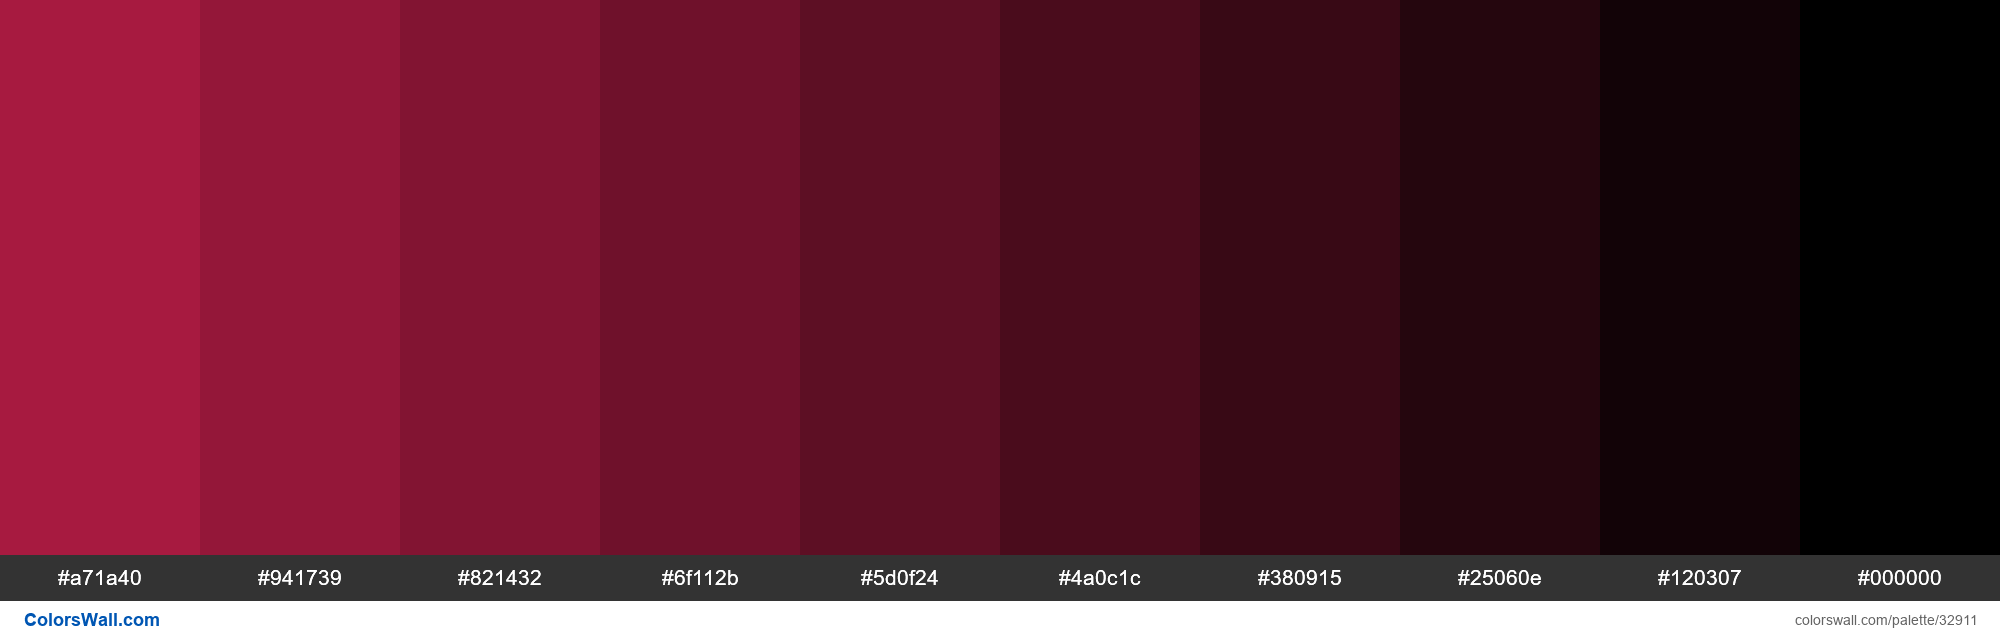 Metro UI Color Dark Red colors palette | ColorsWall